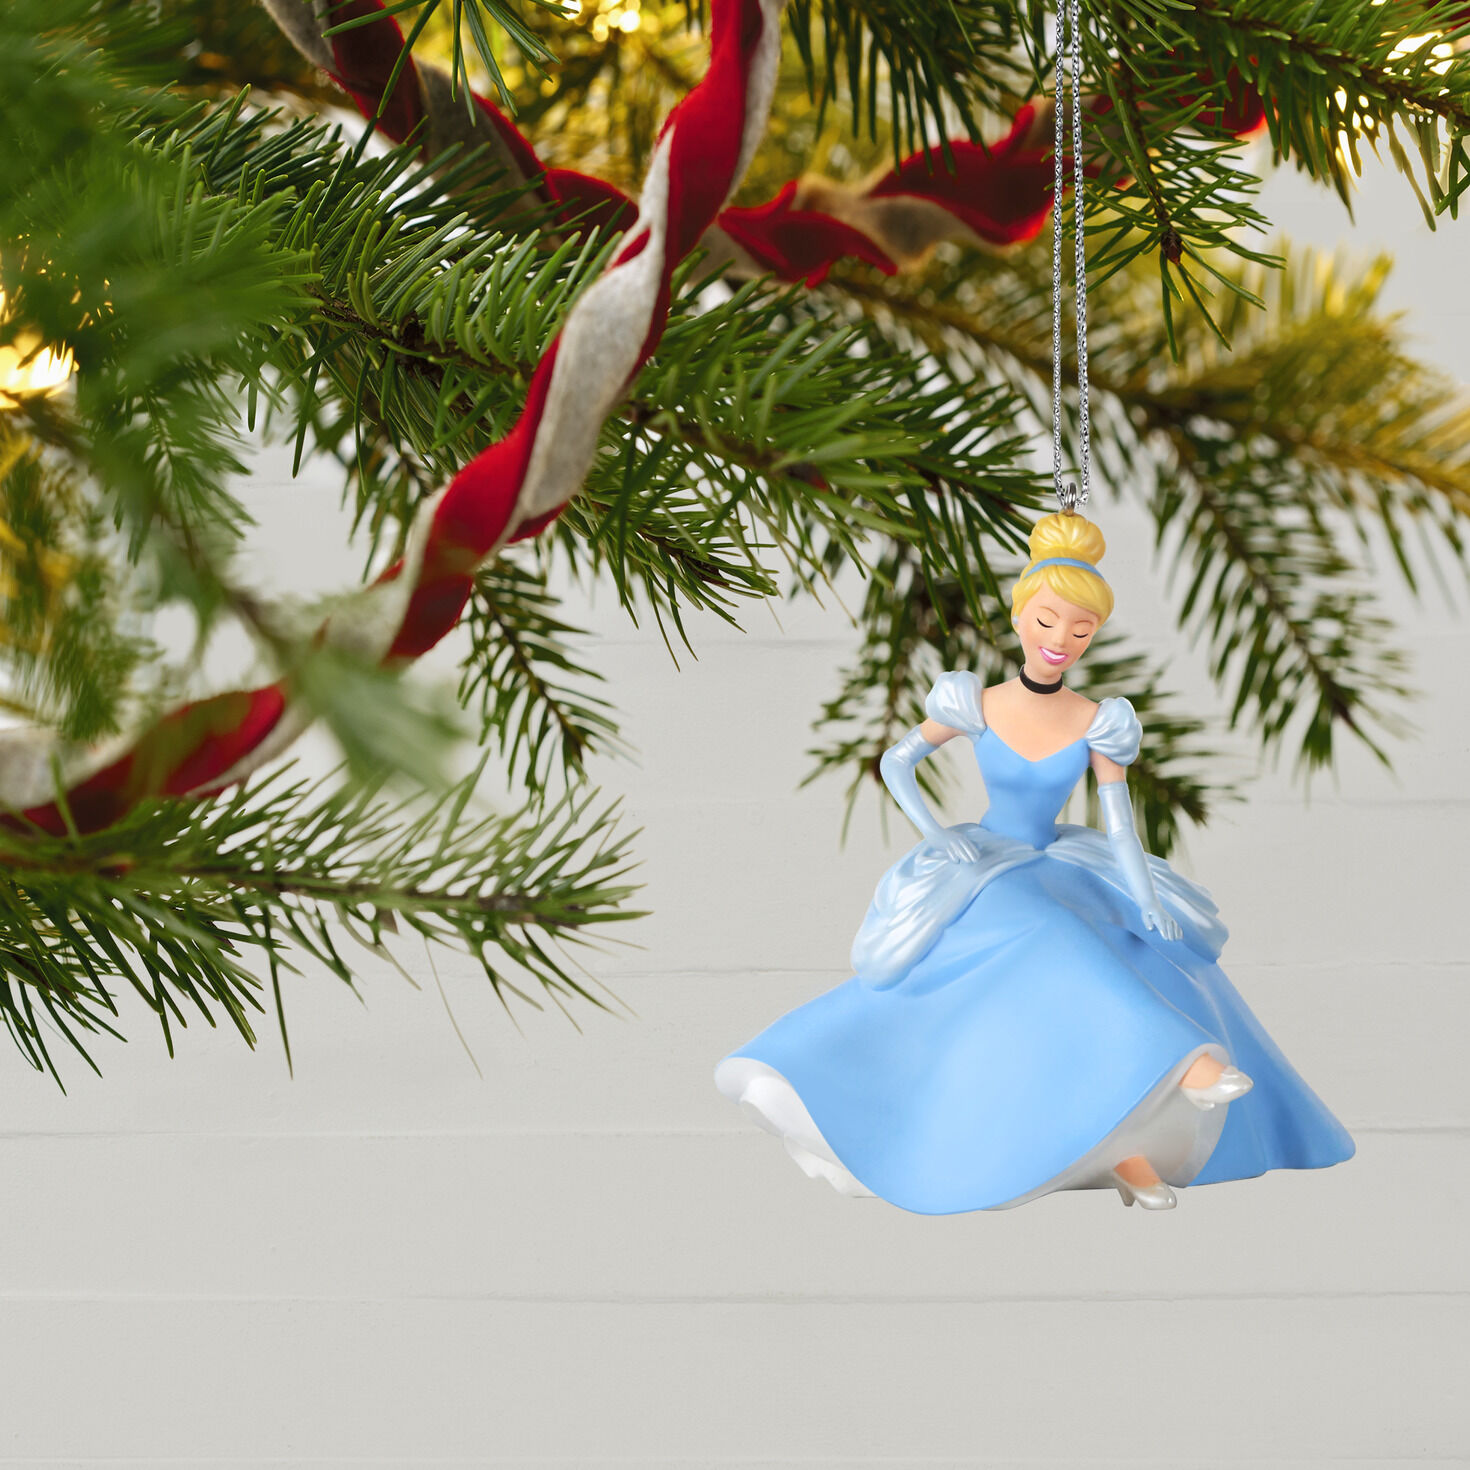 Hallmark Cinderella holding a slipper Christmas Tree Ornament New